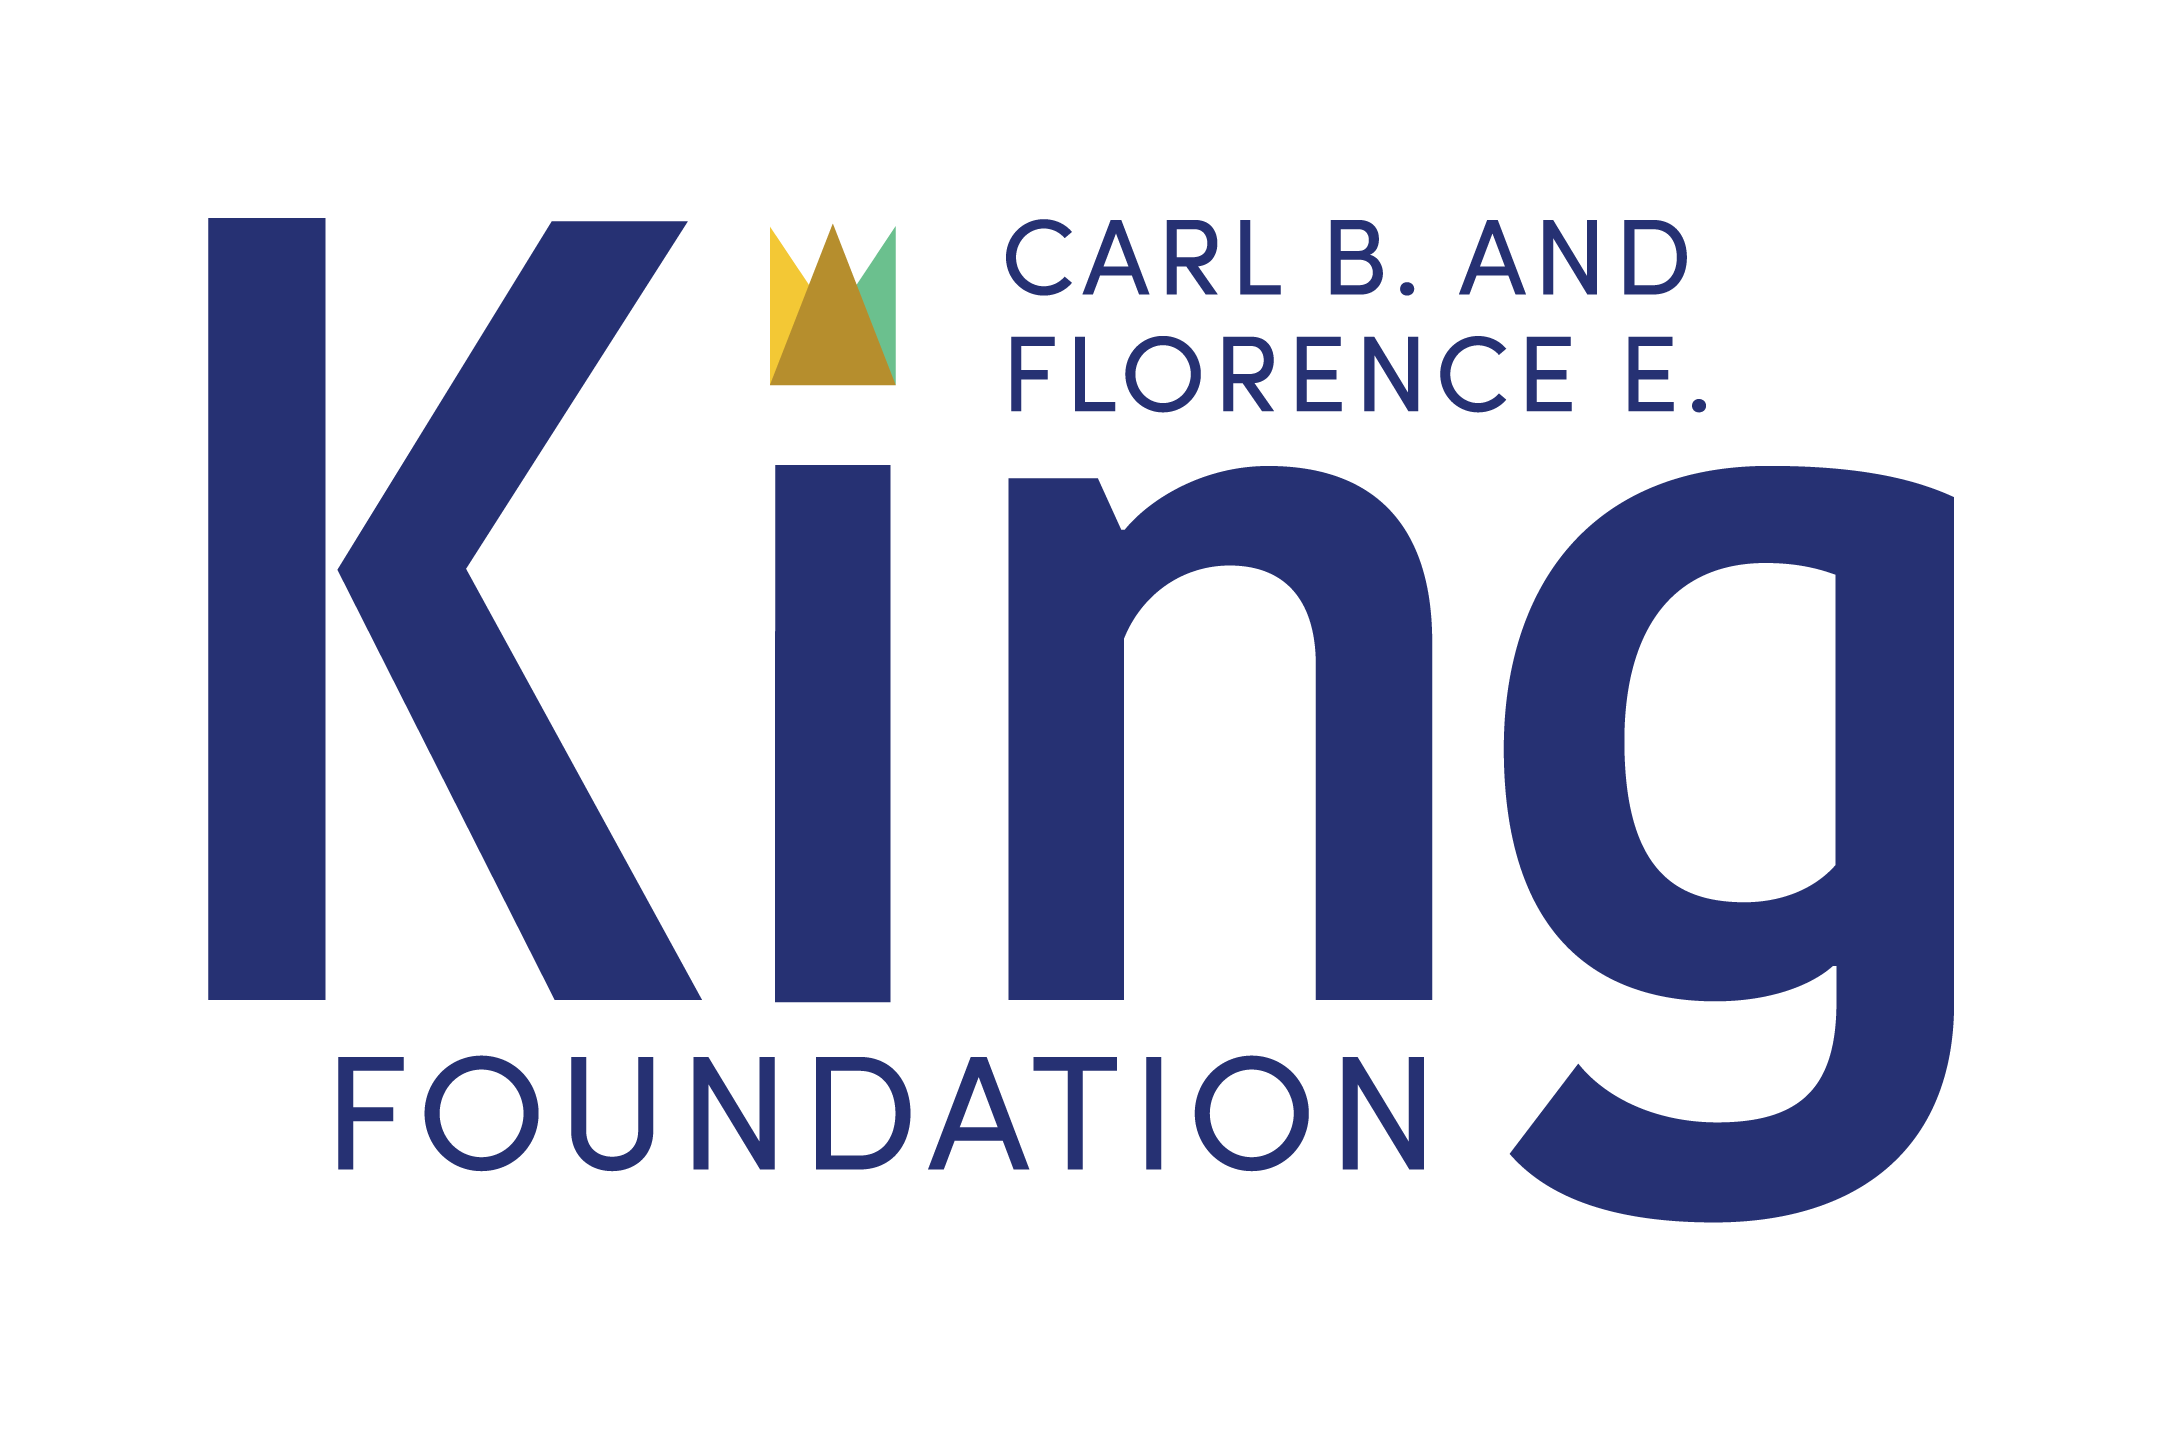 King Foundation